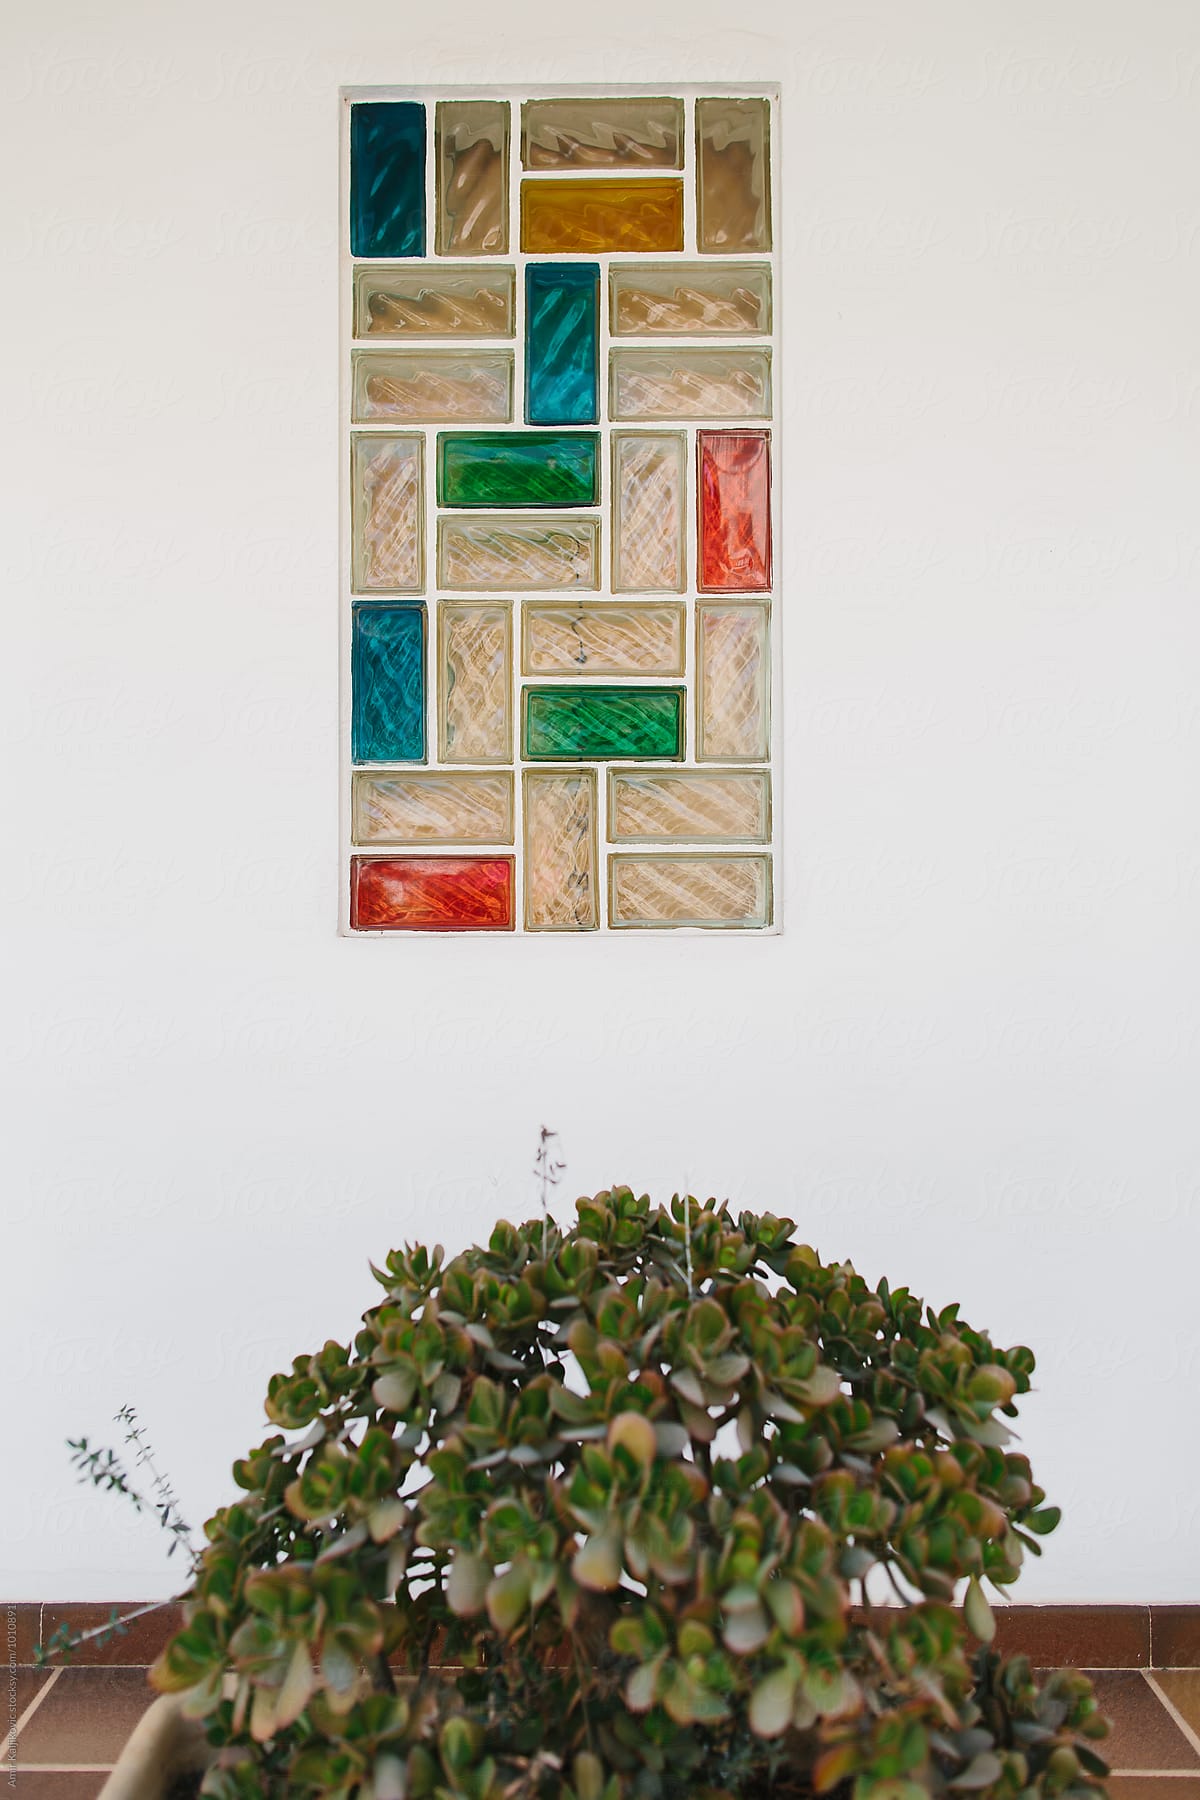 Beautiful glass block mosaic pattern in wall